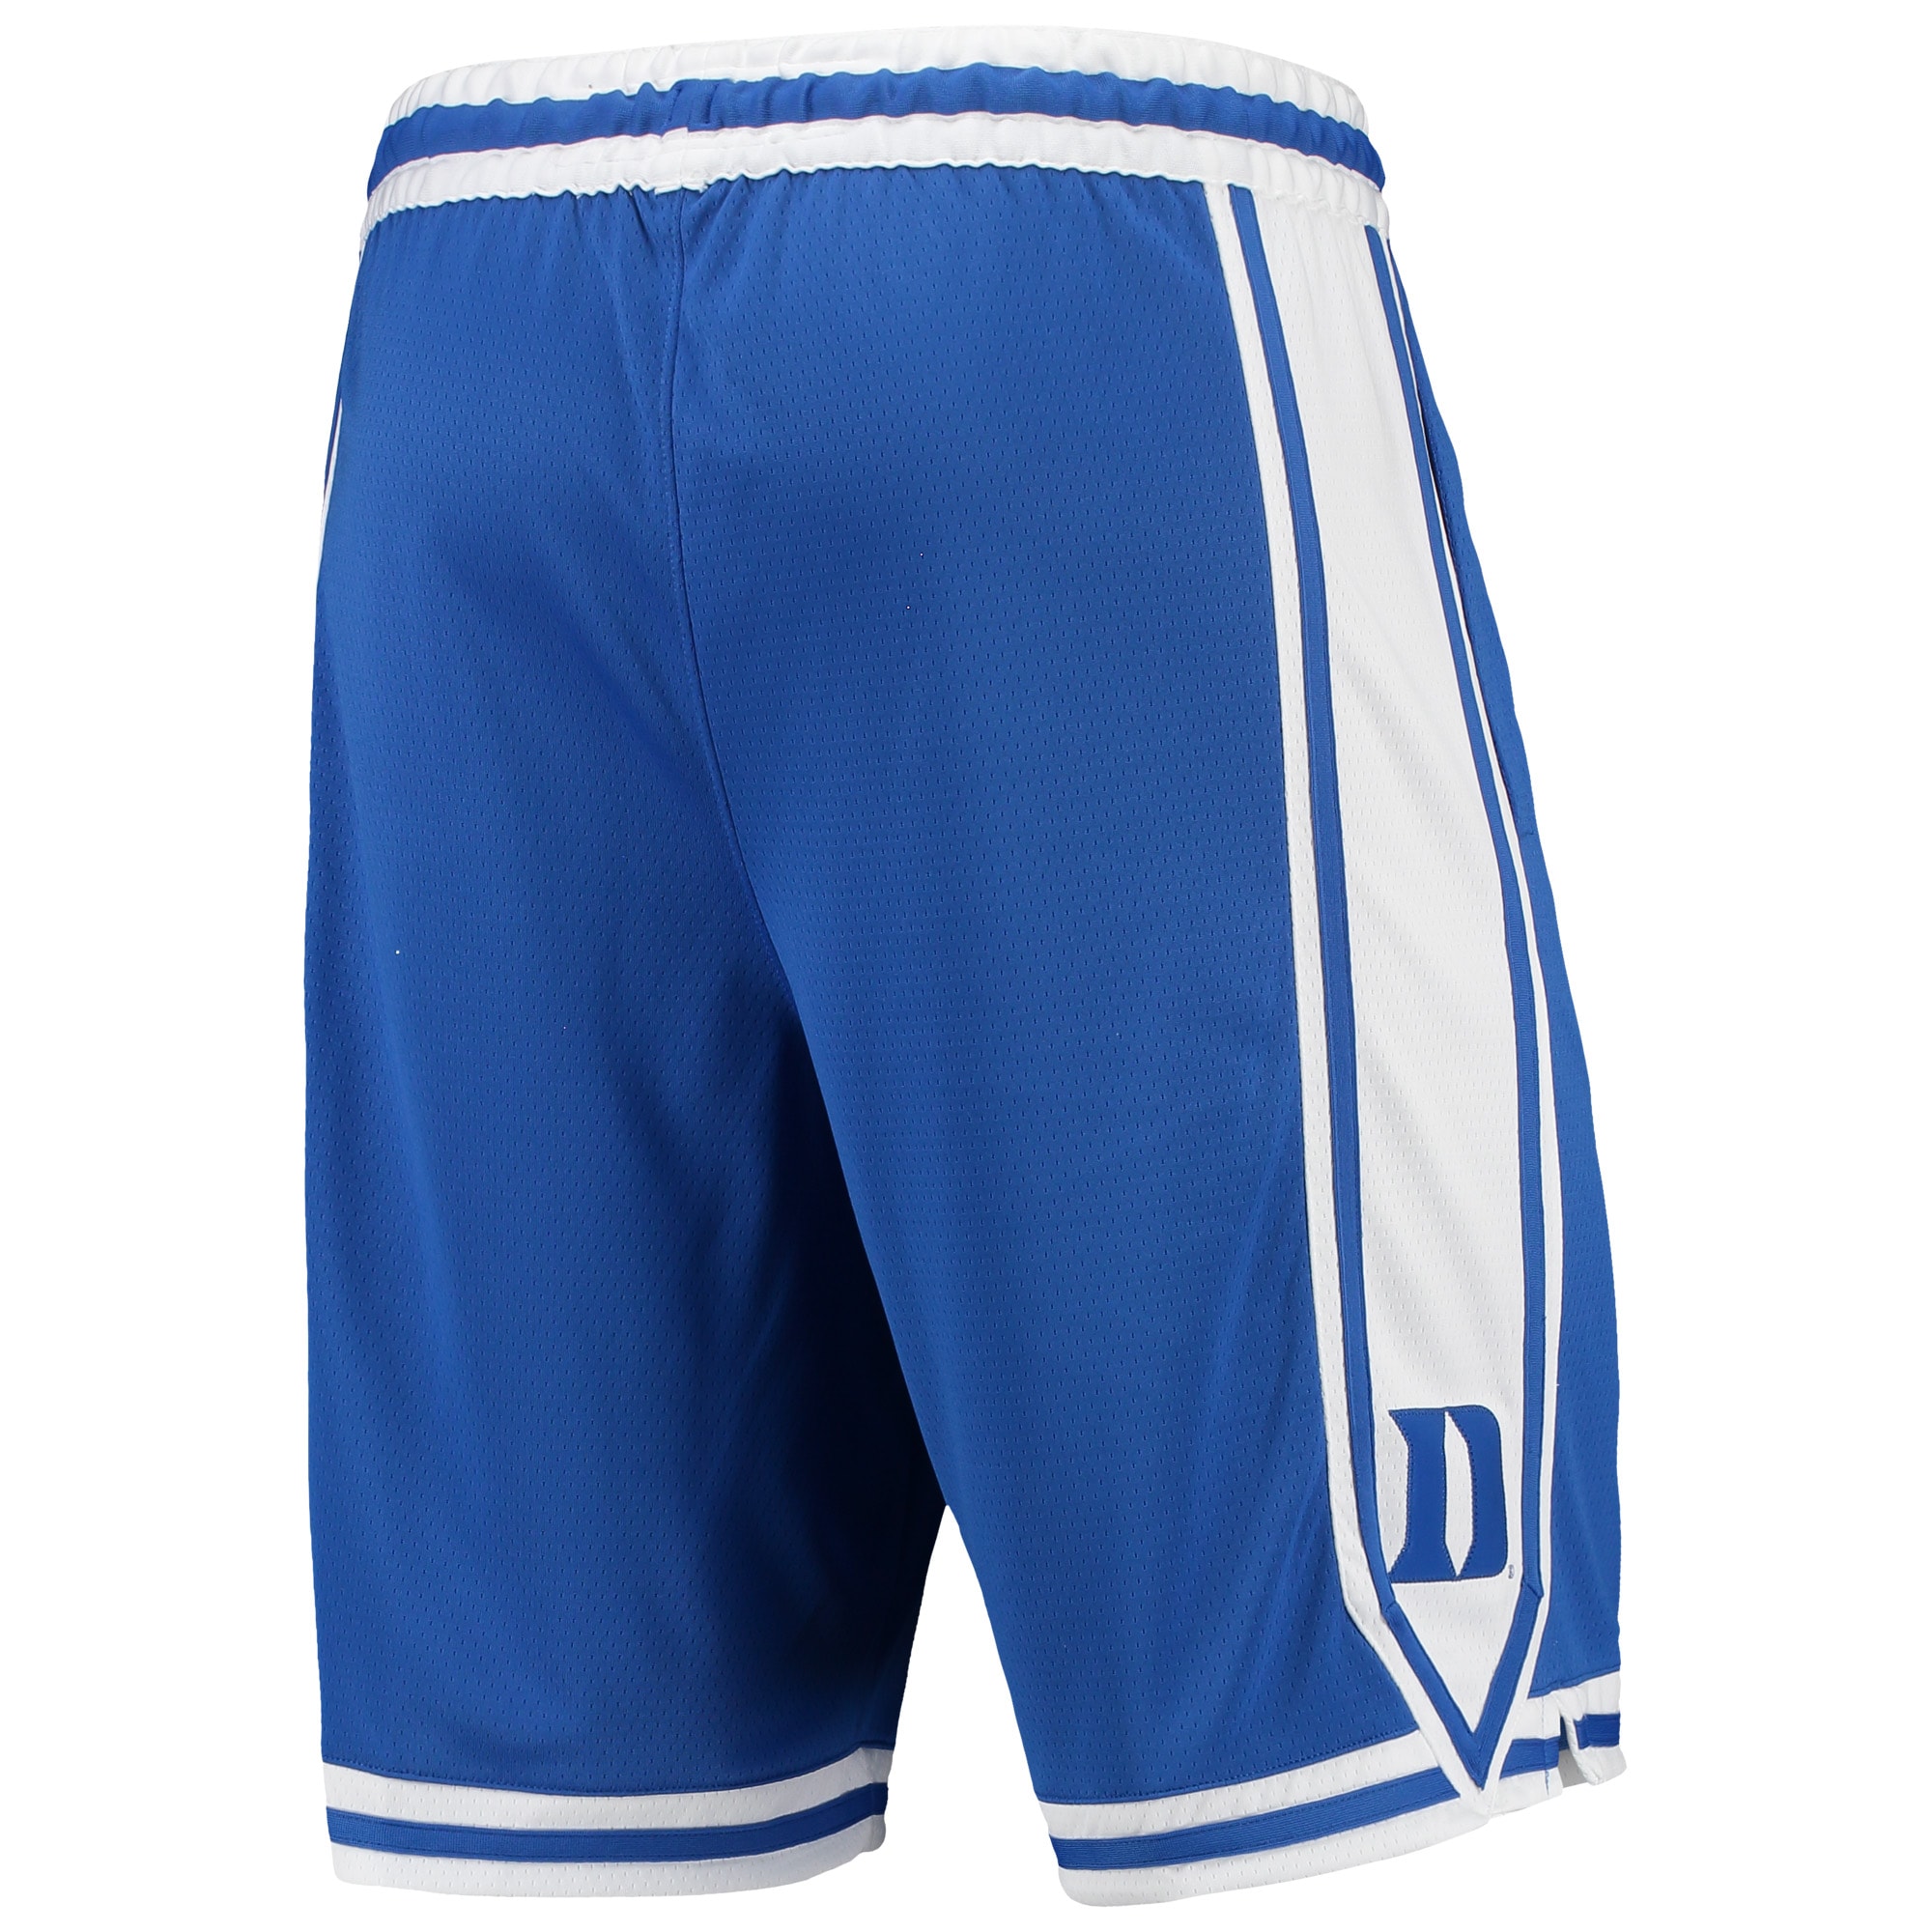 Men's Nike Royal Duke Blue Devils Limited Basketball Shorts - image 3 of 4